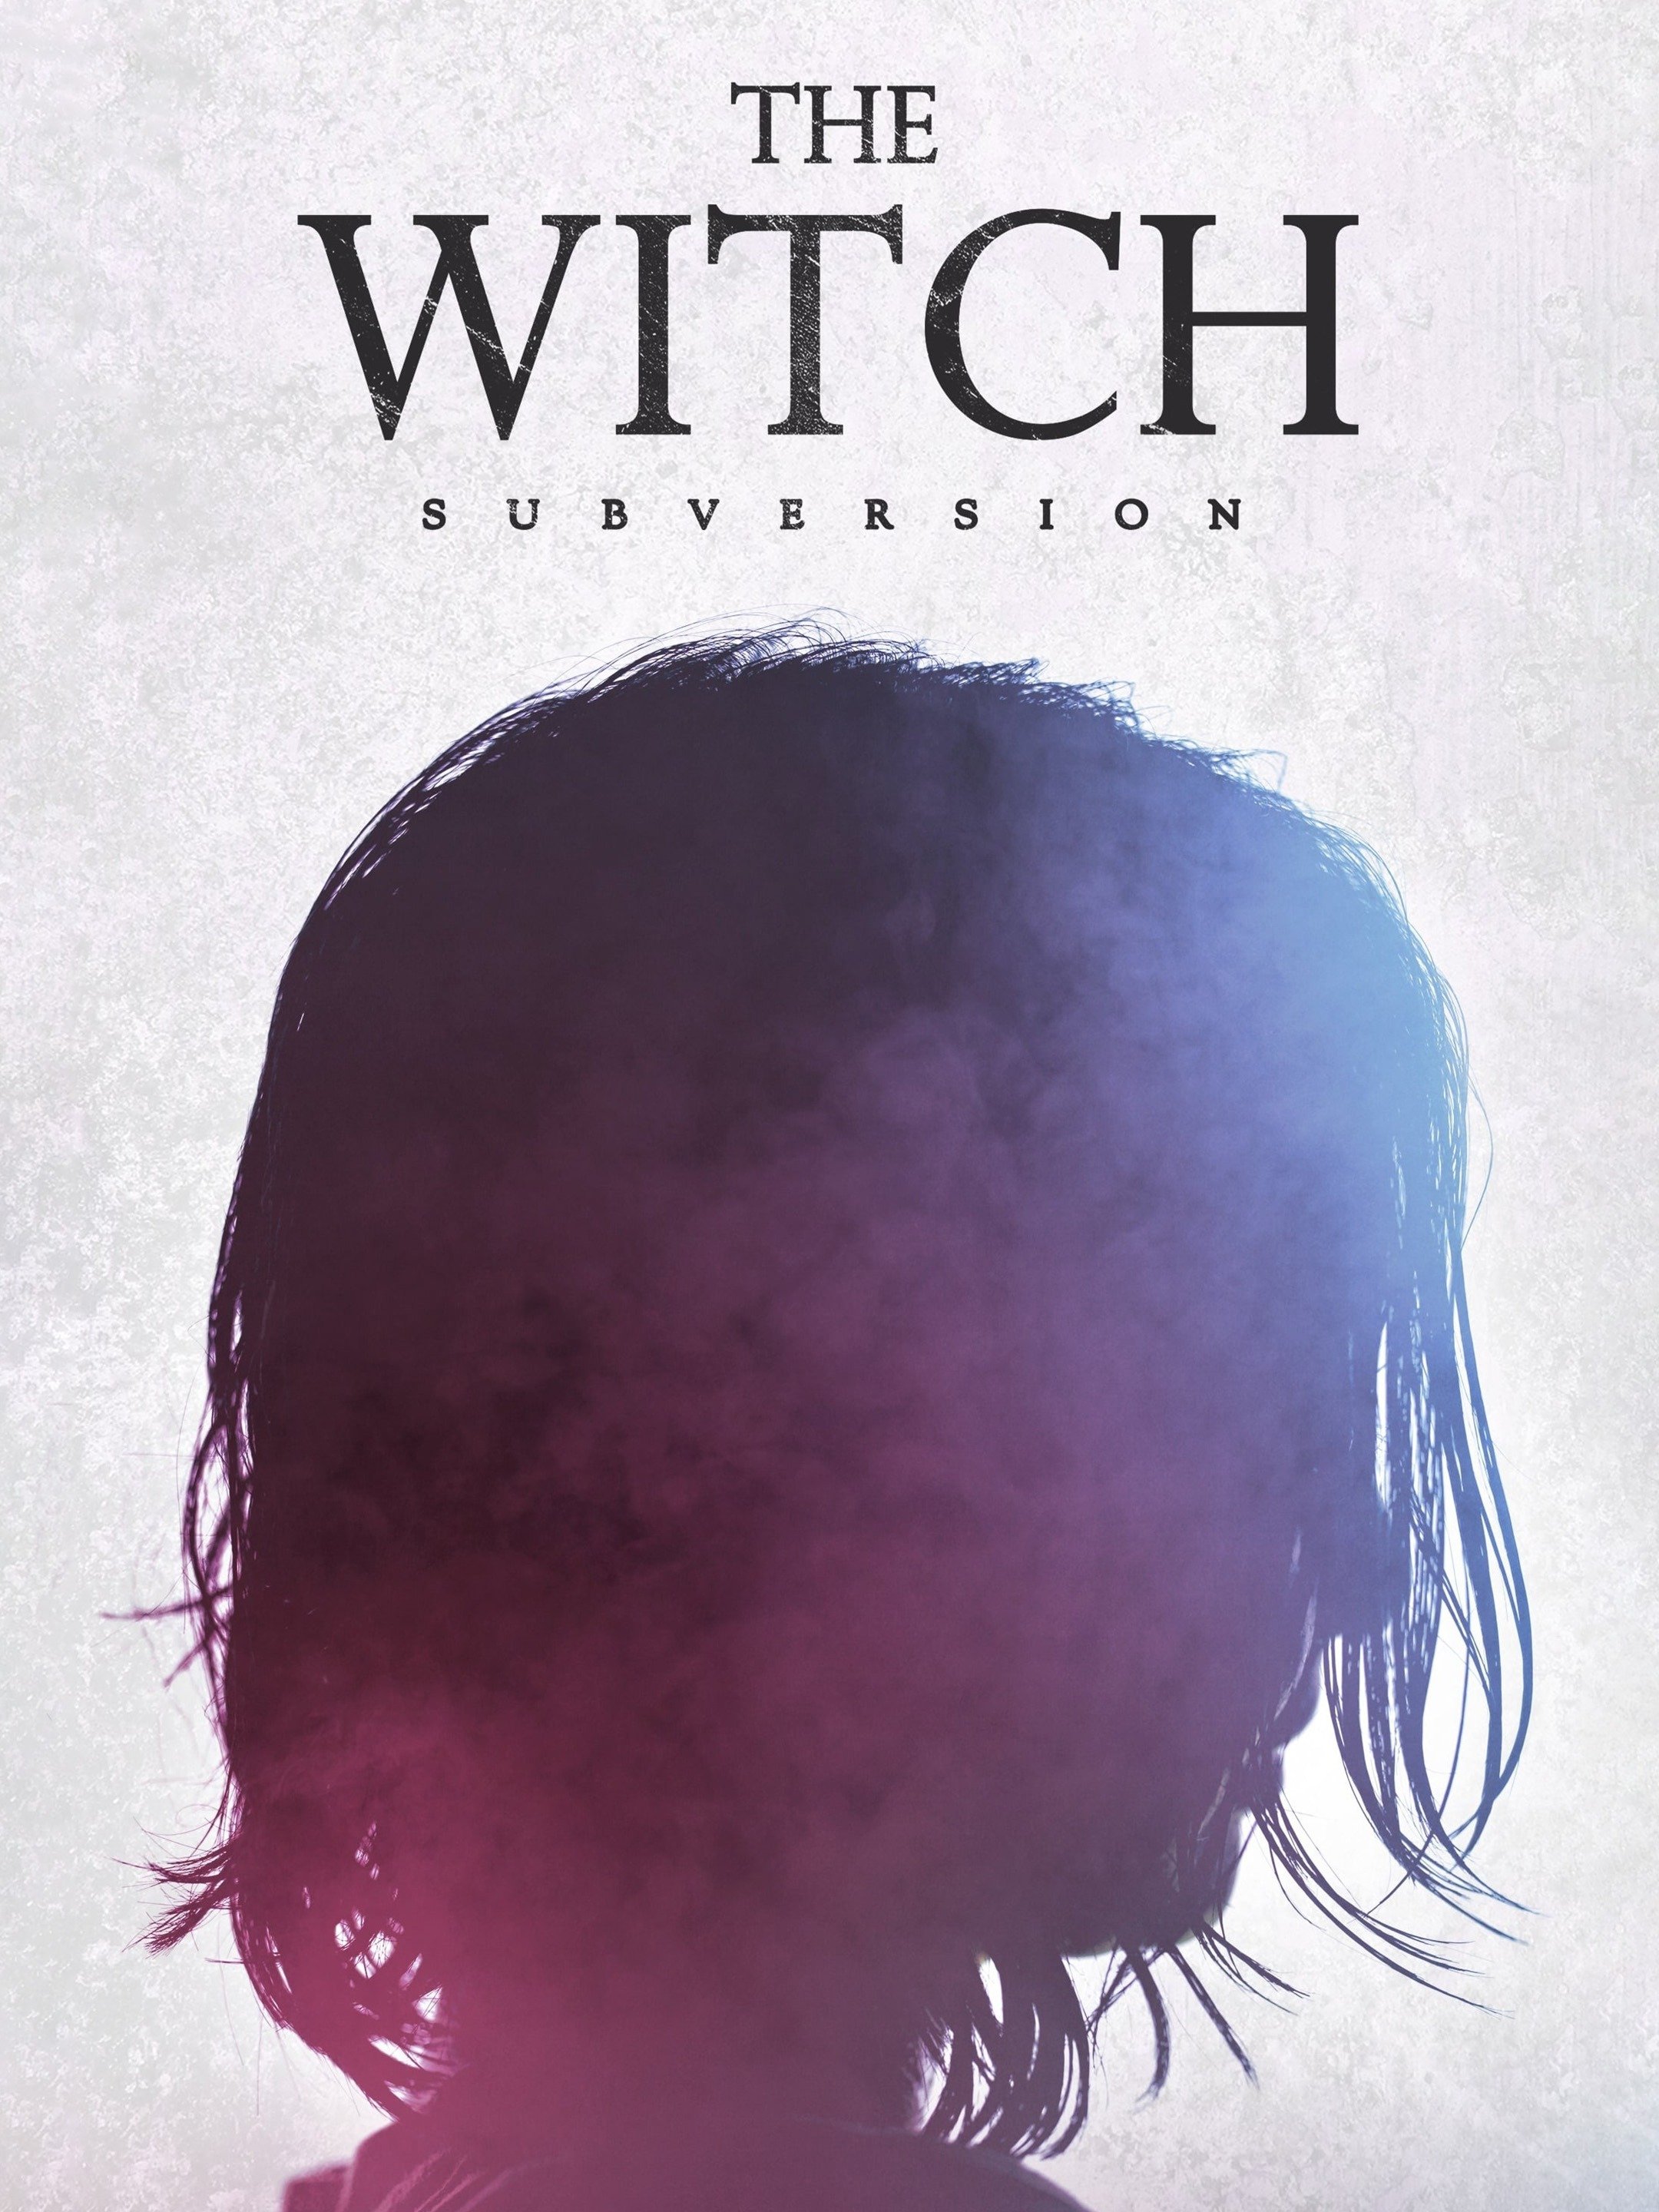 thw witch part 1 subversion